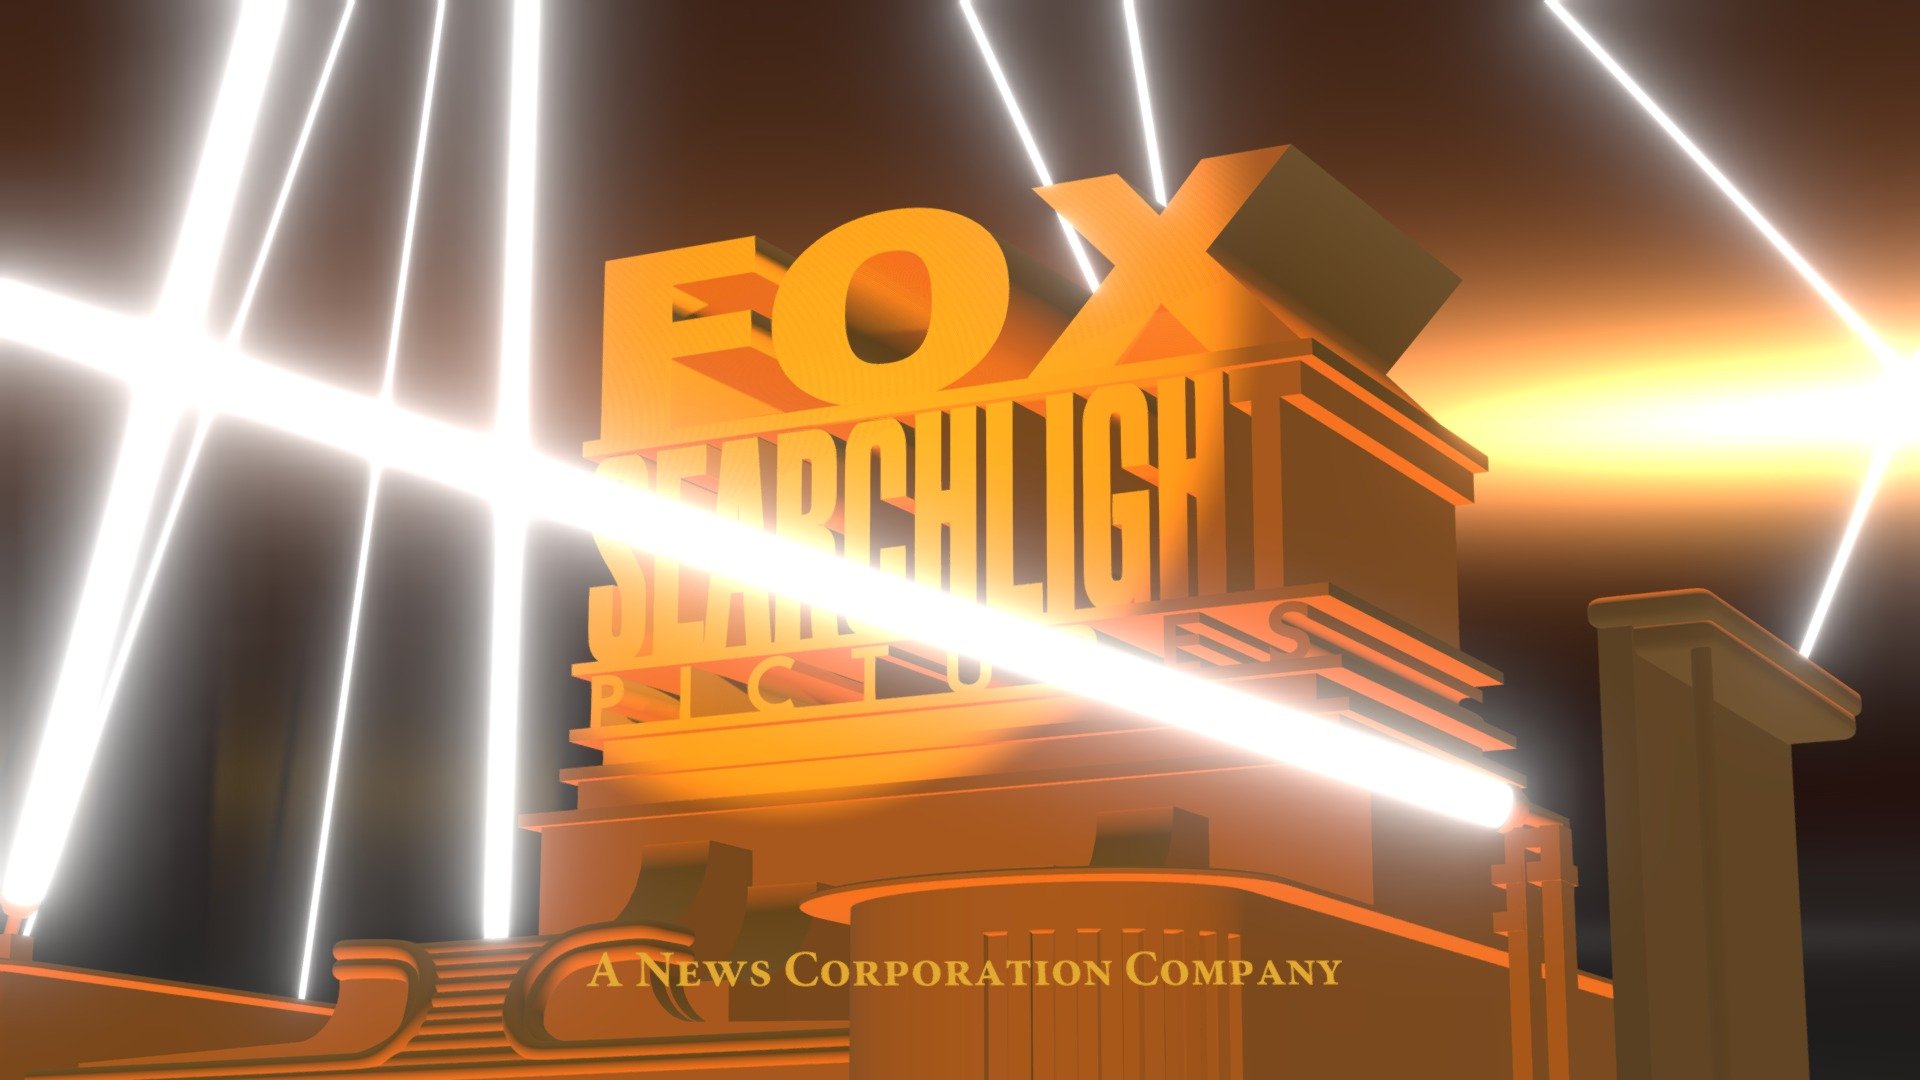 Fox Searchlight pictures. Fox Searchlight pictures logo. Fox searchlight